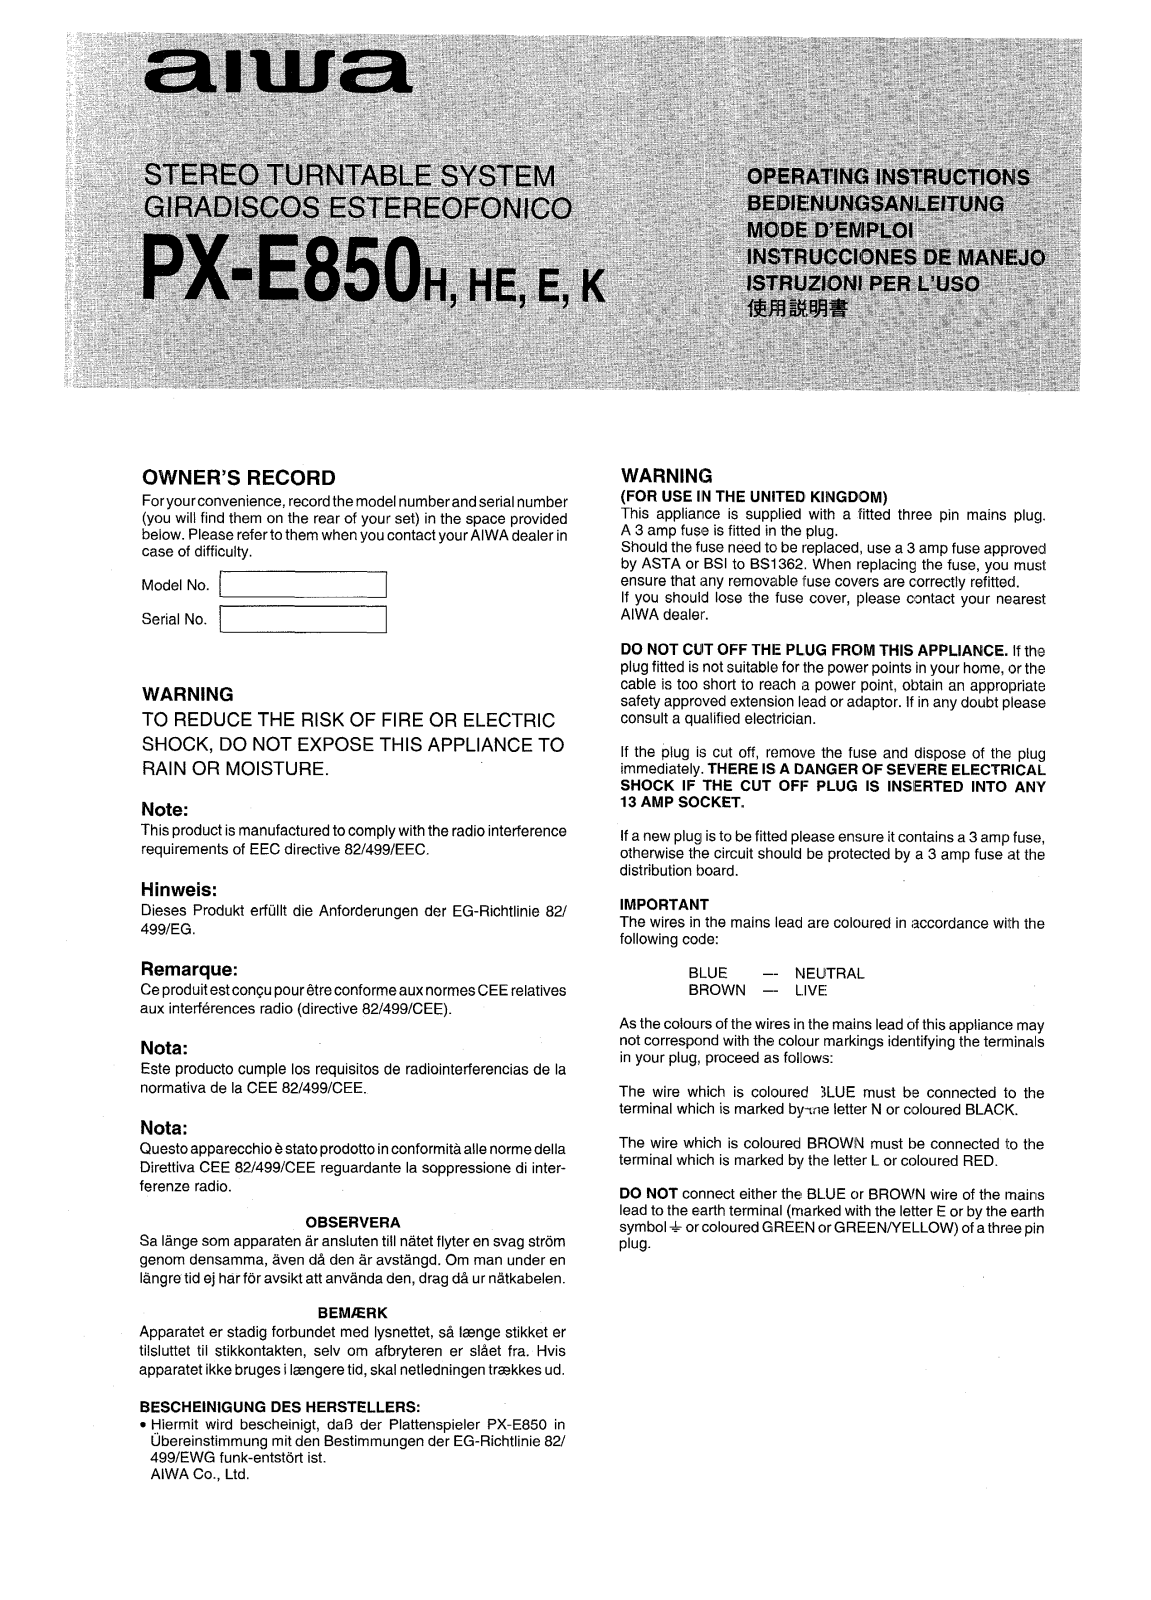 Sony PXE850h, PXE850he, PXE850e, PXE850k Operating Manual